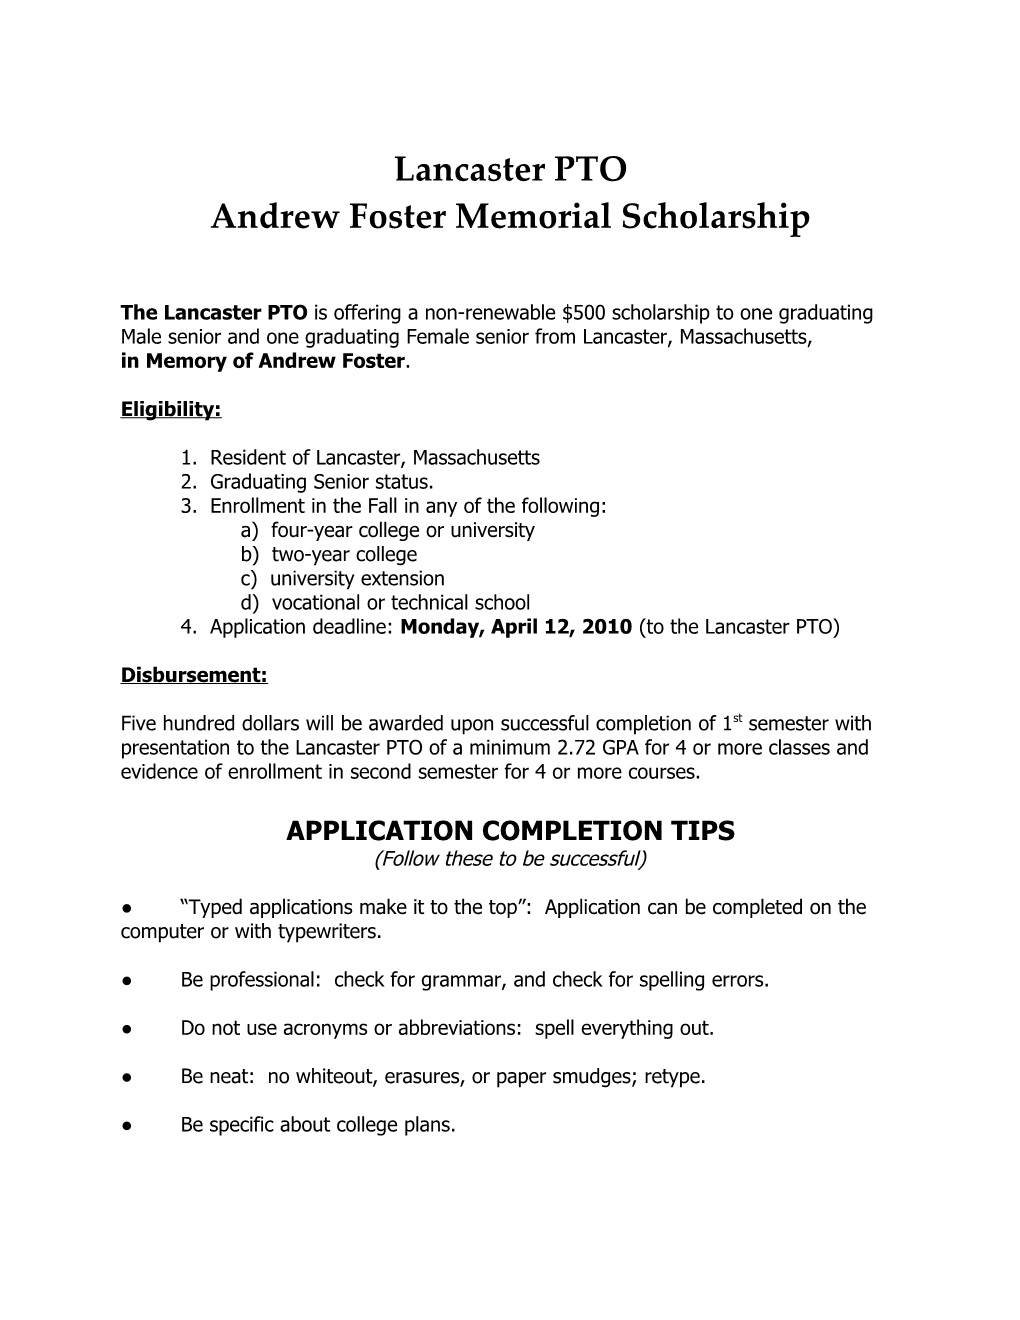 PTO Andrew Foster Scholarship